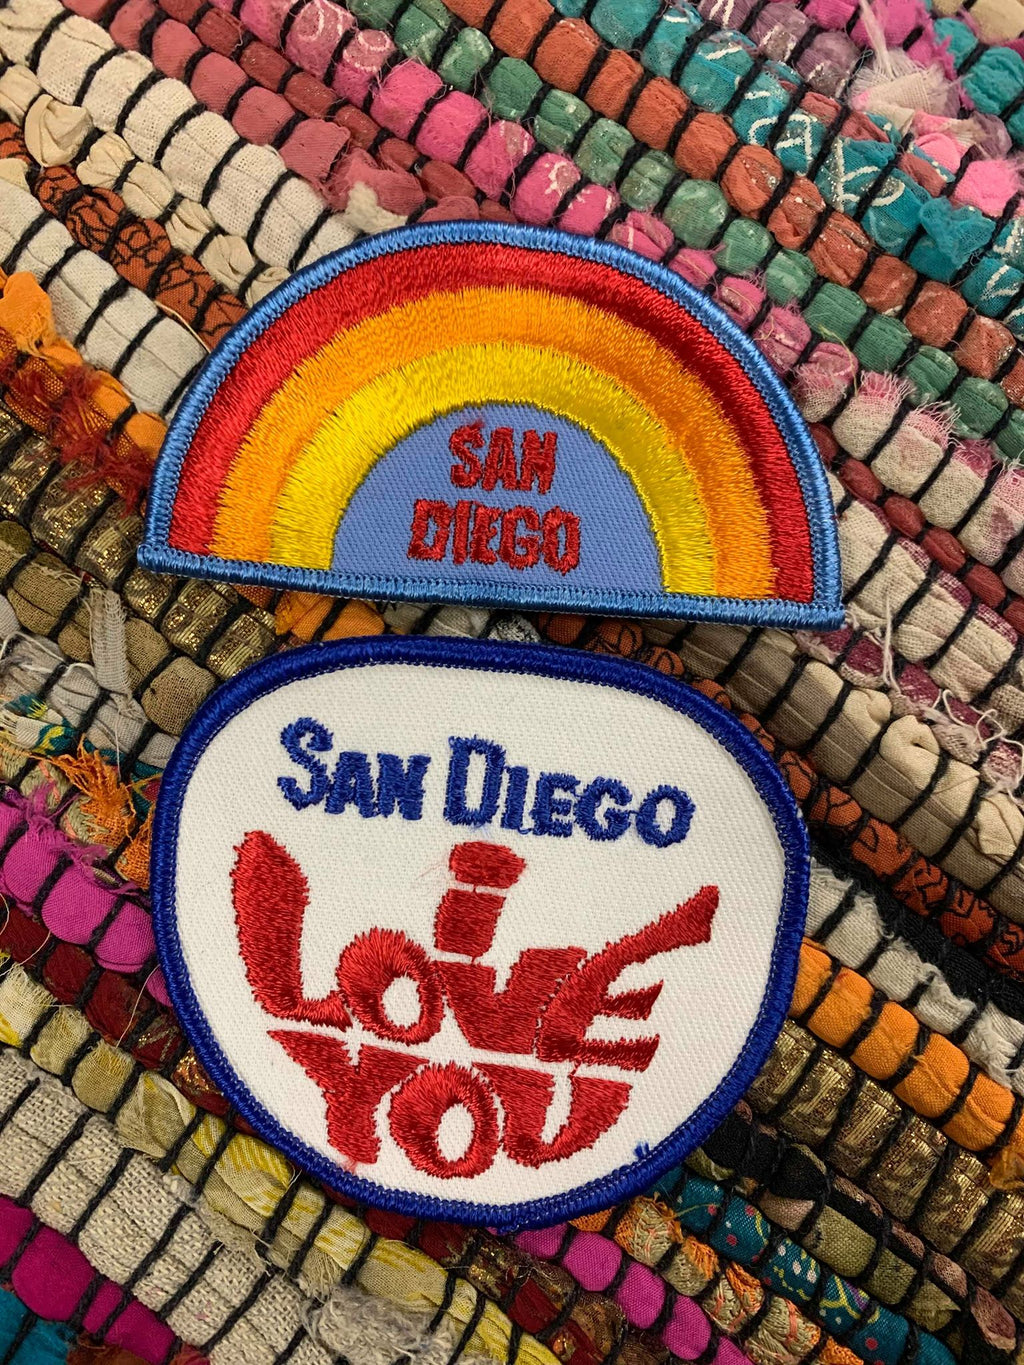 San Diego Set